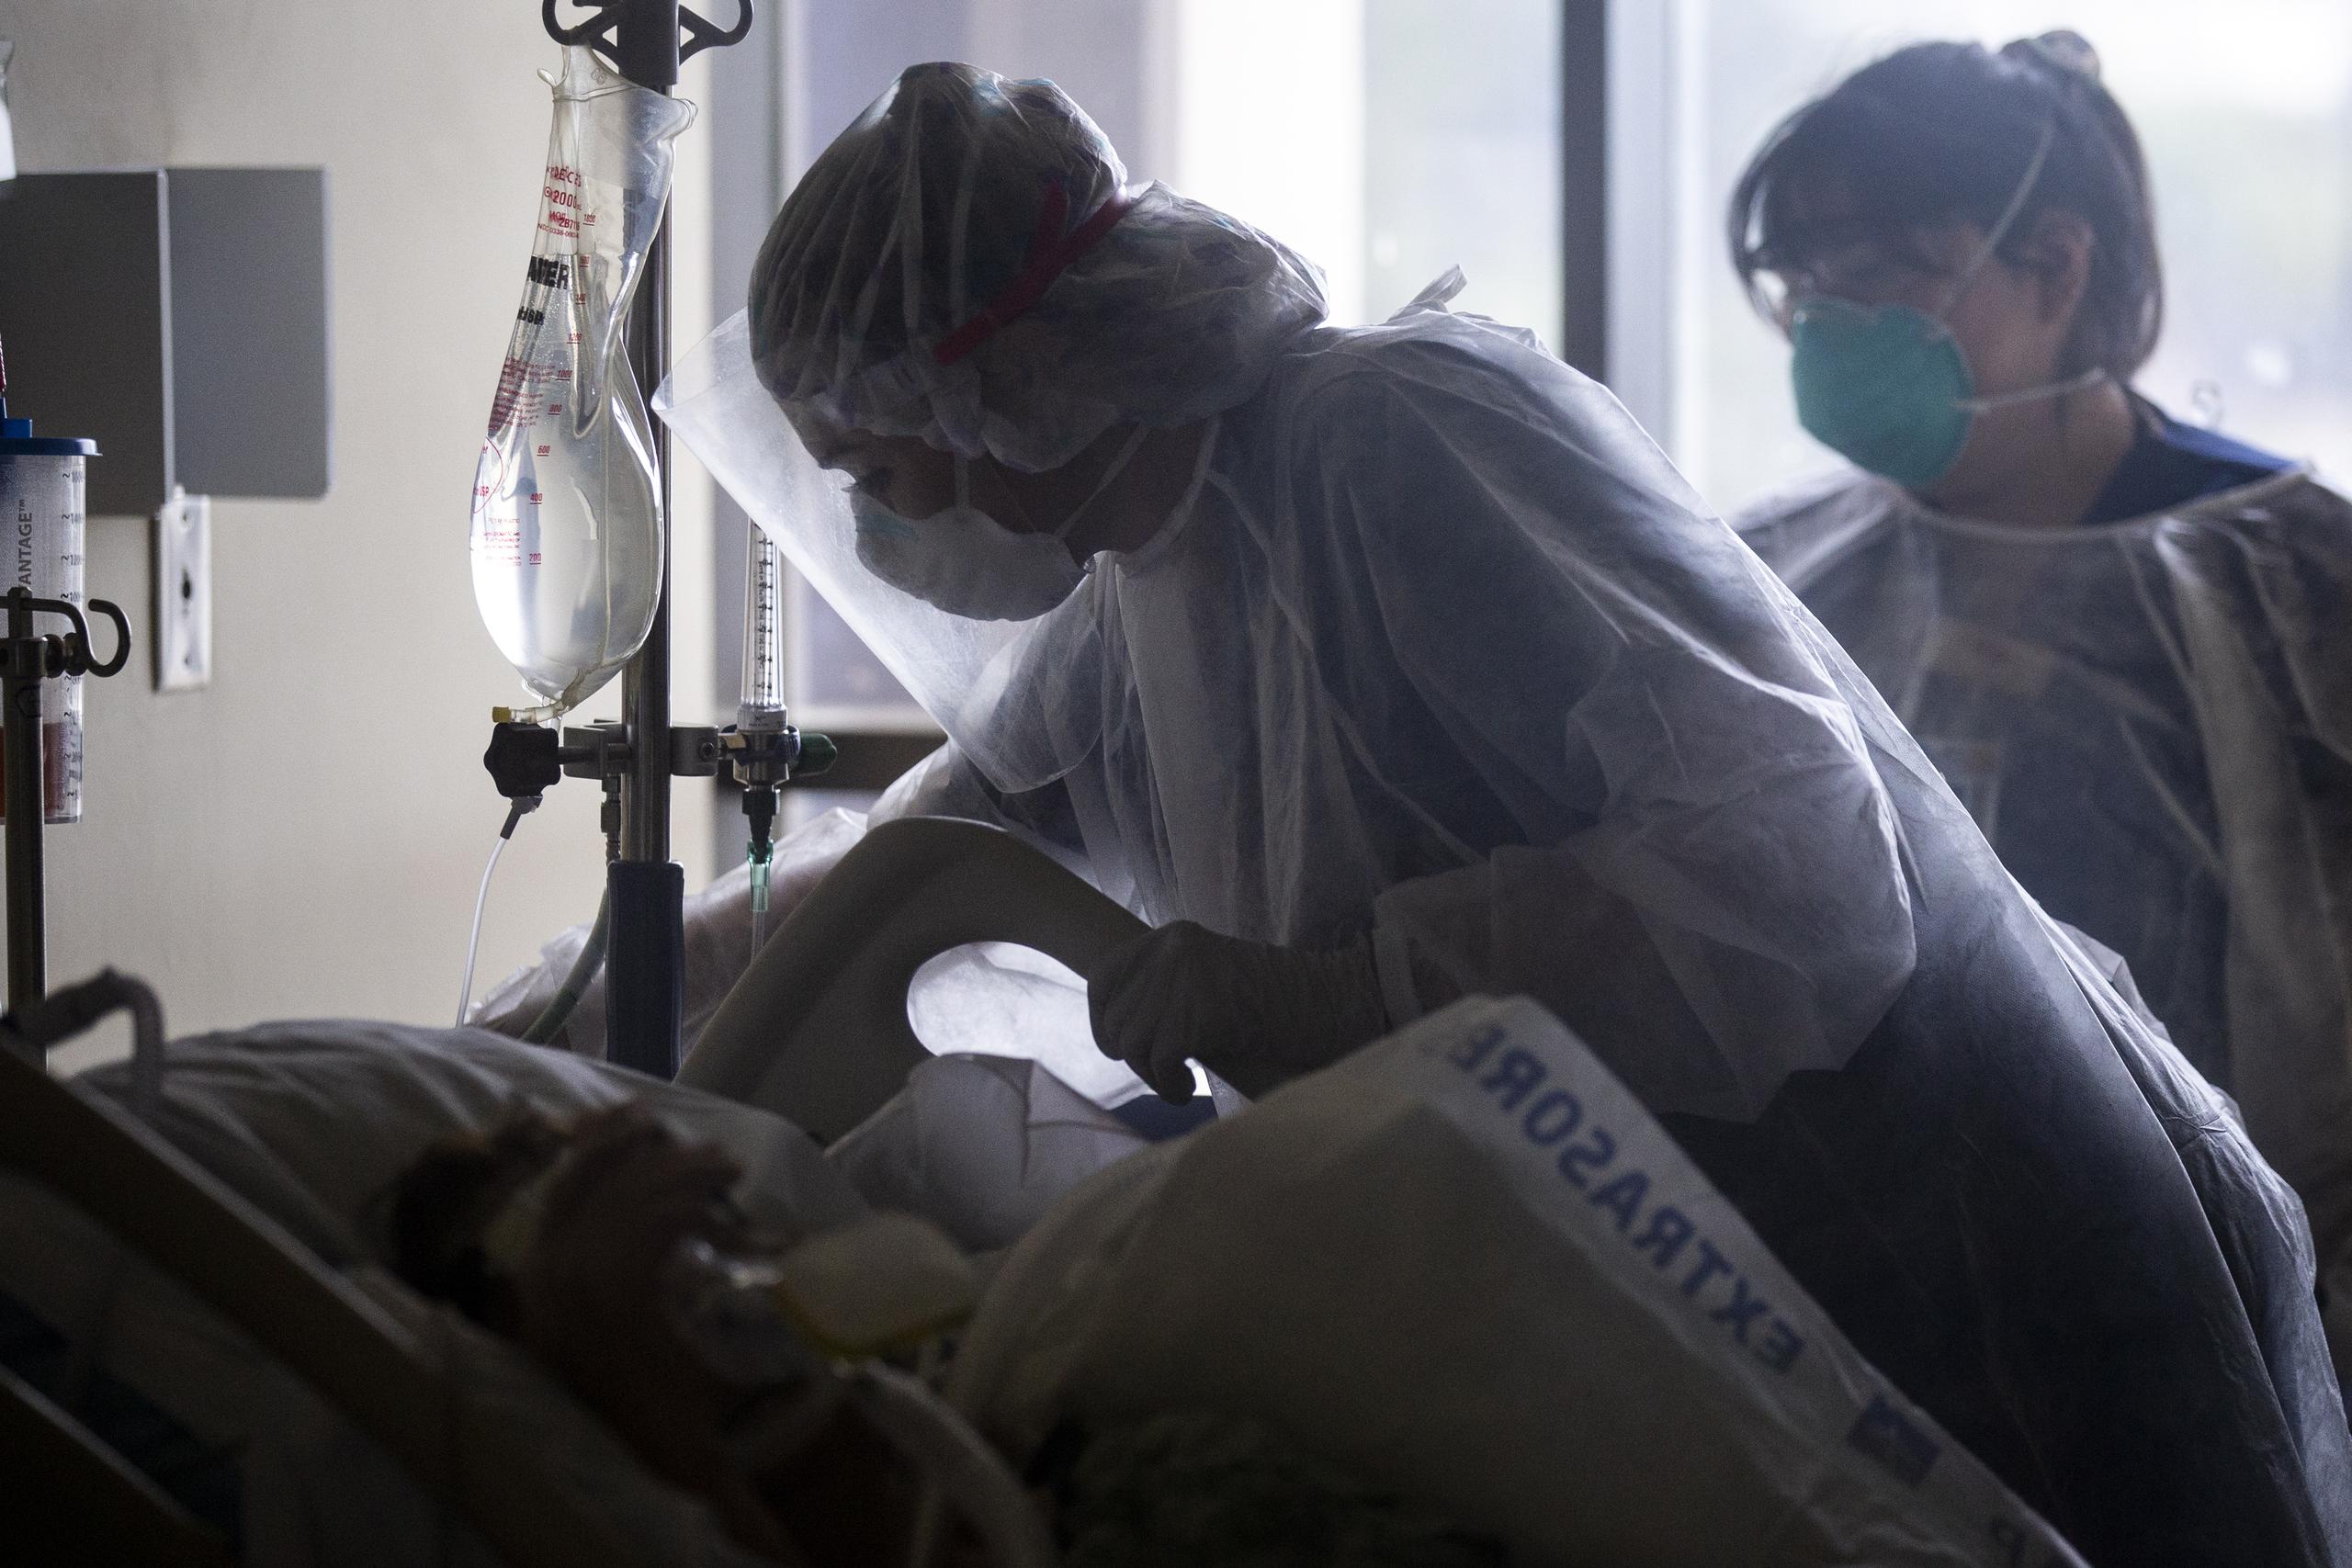 El número de hospitalizaciones cayó en 25, según reportó Salud.